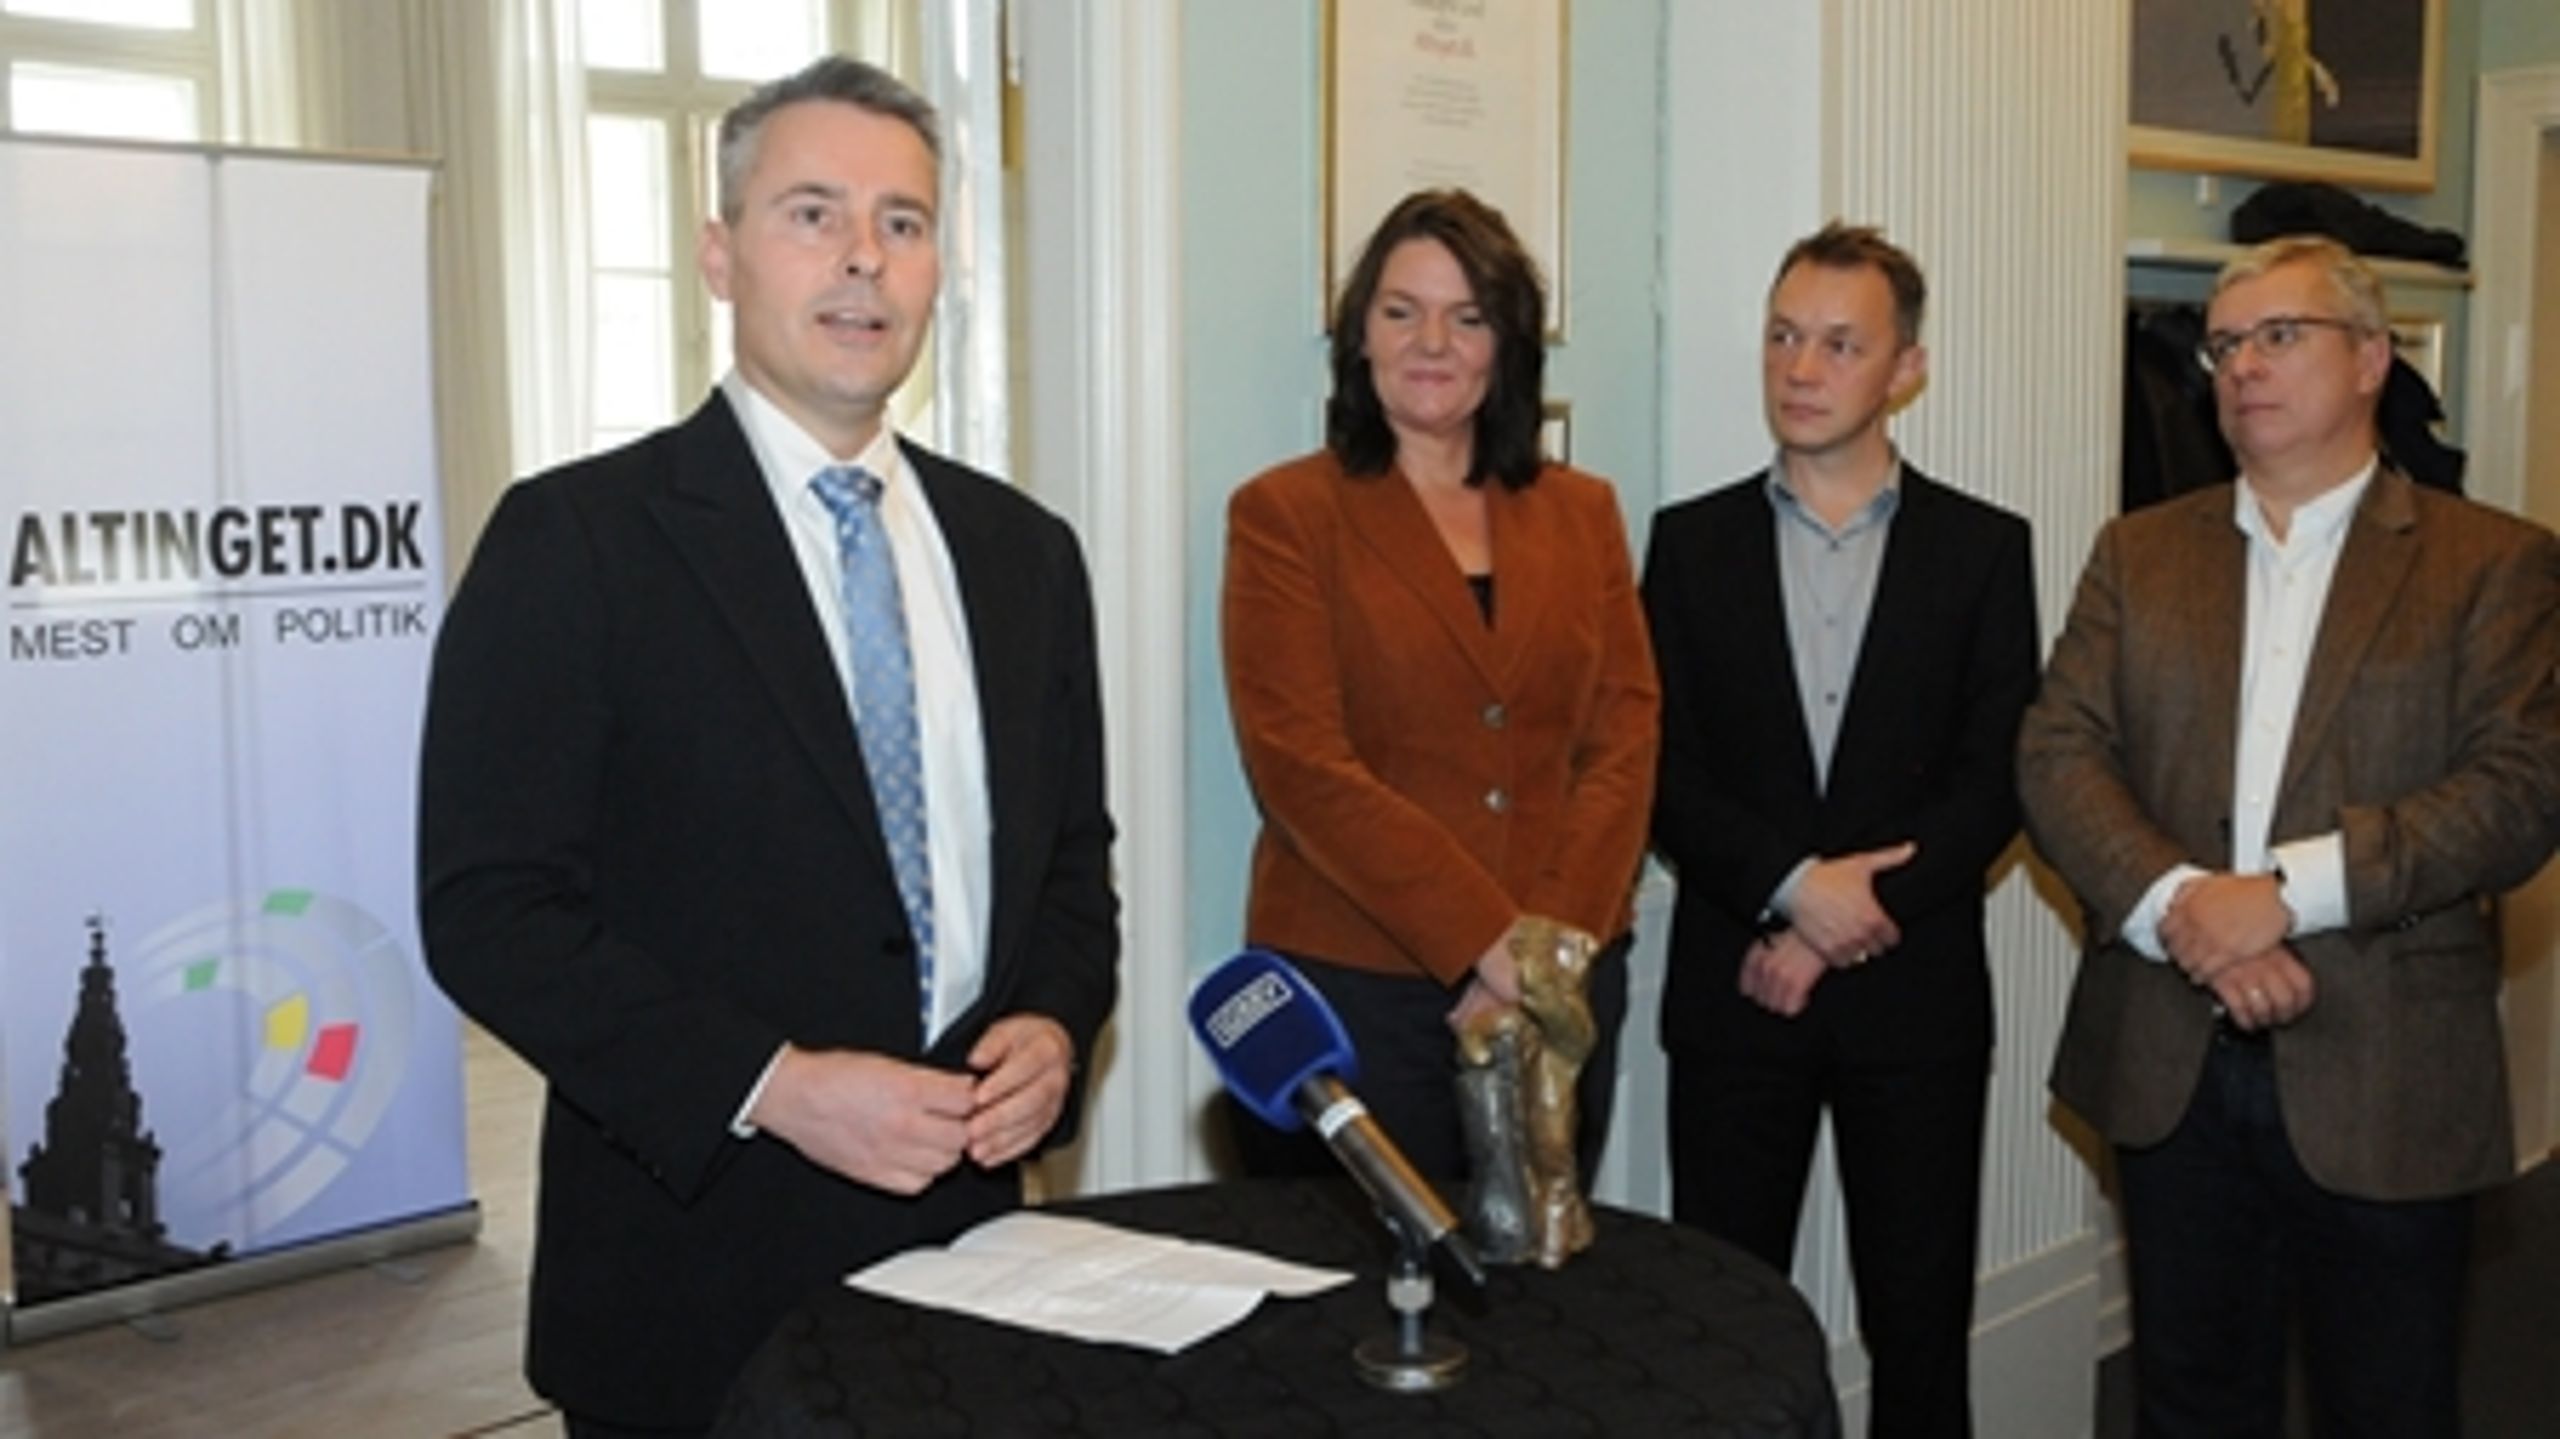 Erhvervs- og vækstminister Henrik Sass Larsen (S) takkede for Ting-Prisen 2013. Til højre priskomiteen Søs Marie Serup Laybourn, Jan Juul Christensen og Rasmus Nielsen. 